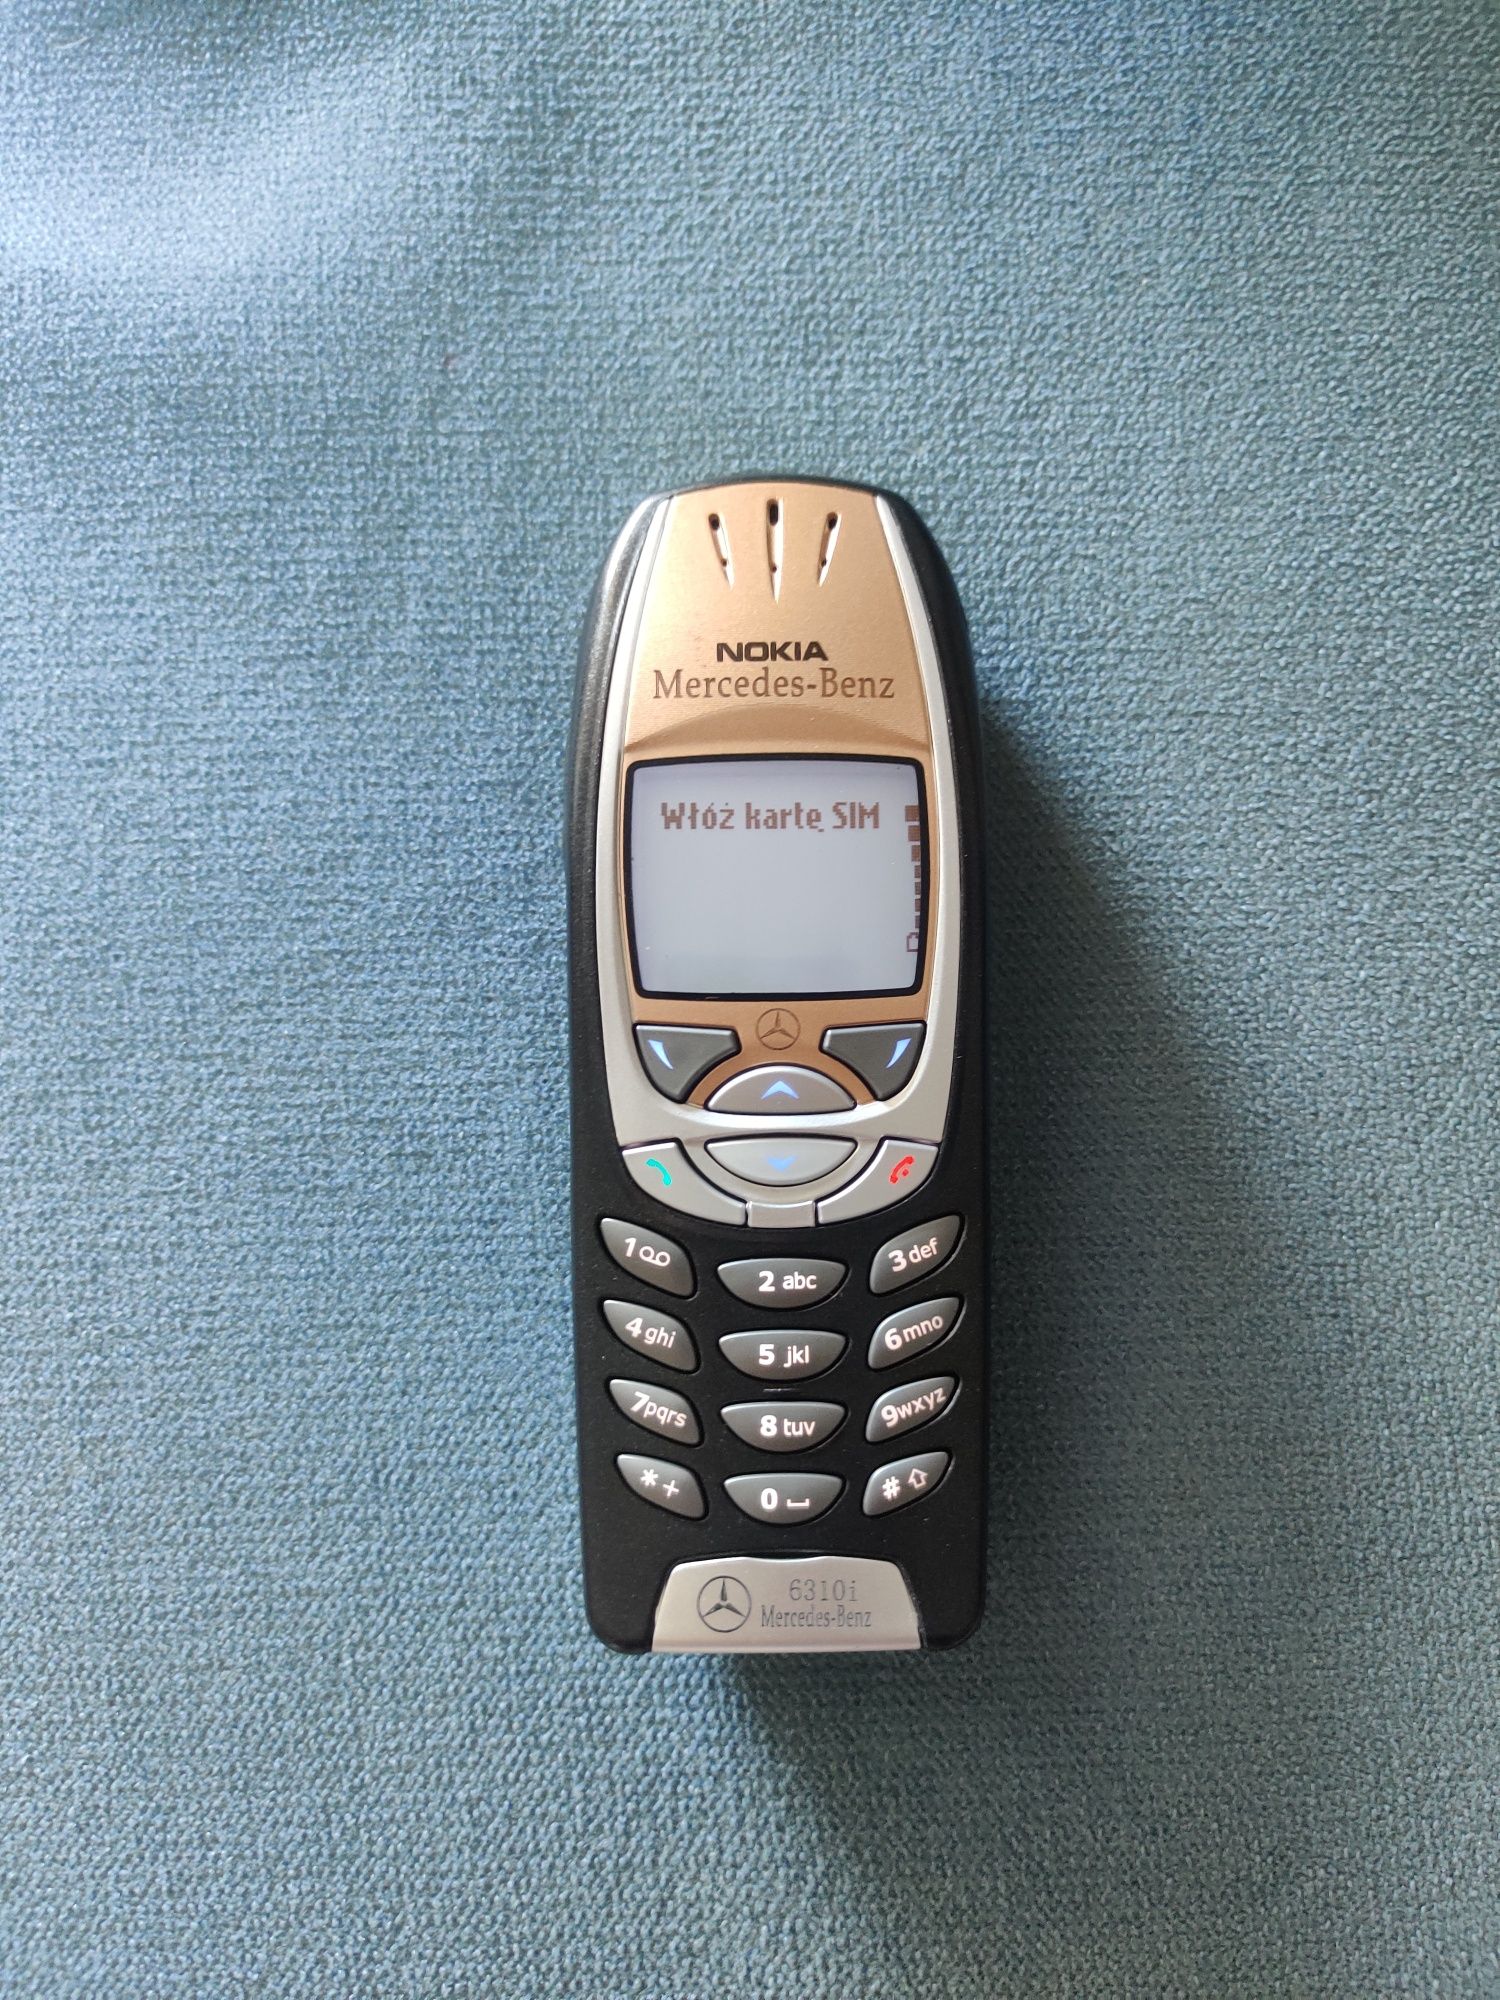 Nokia telefon 6310i Mercedes Benz oryginał limited edition super stan